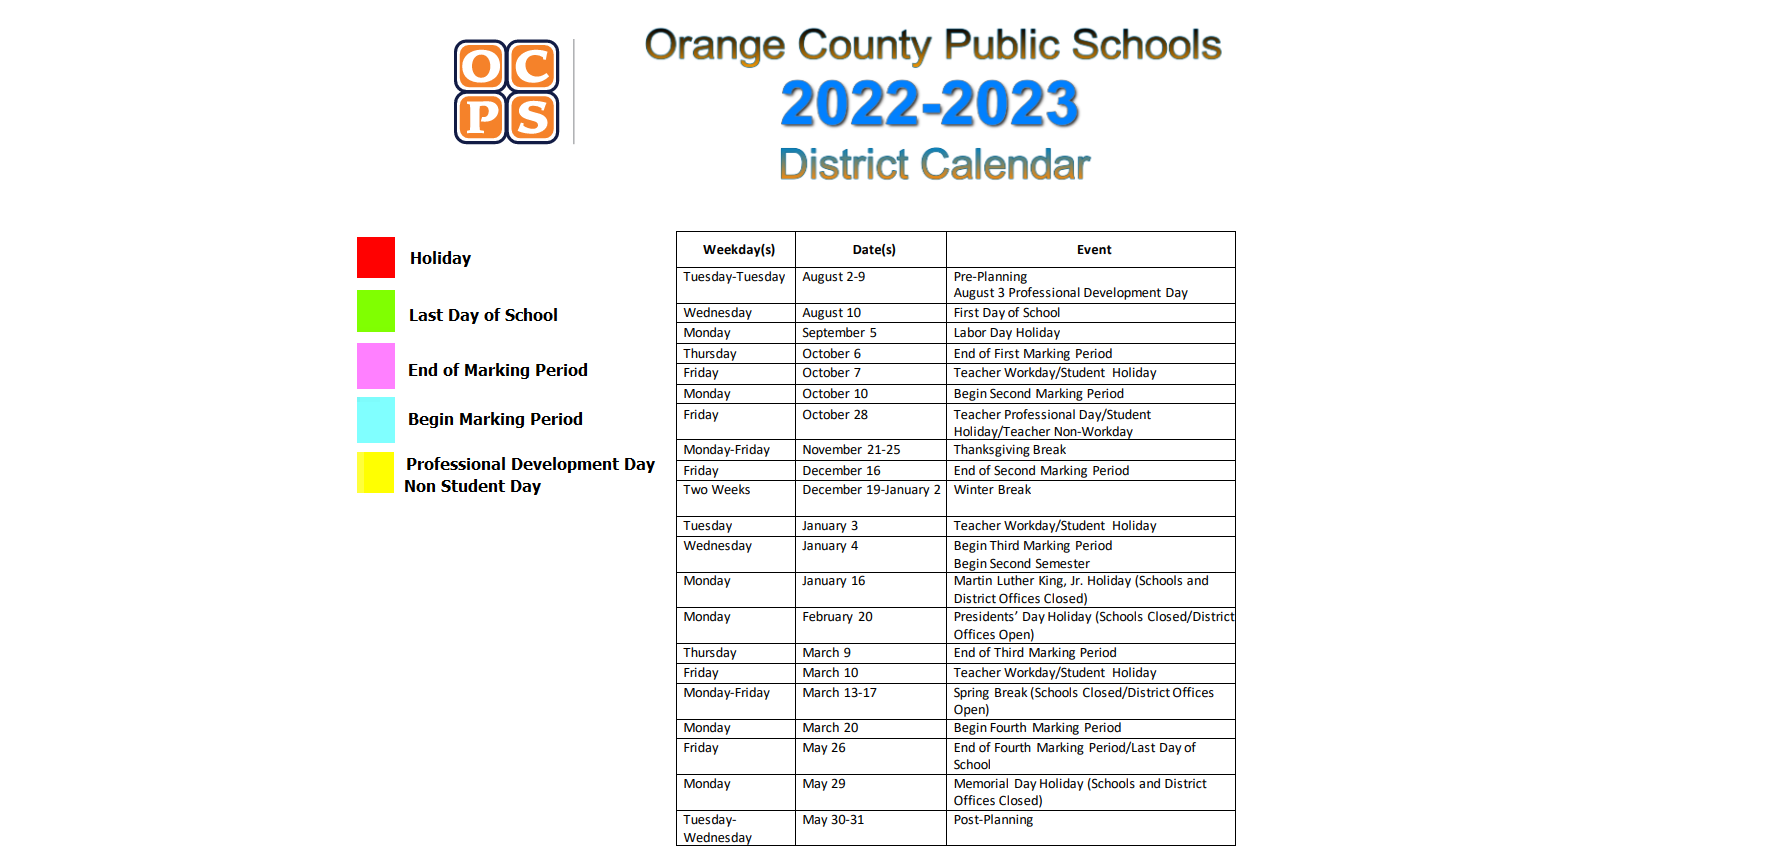 District School Academic Calendar Key for Origins Montessori Charter